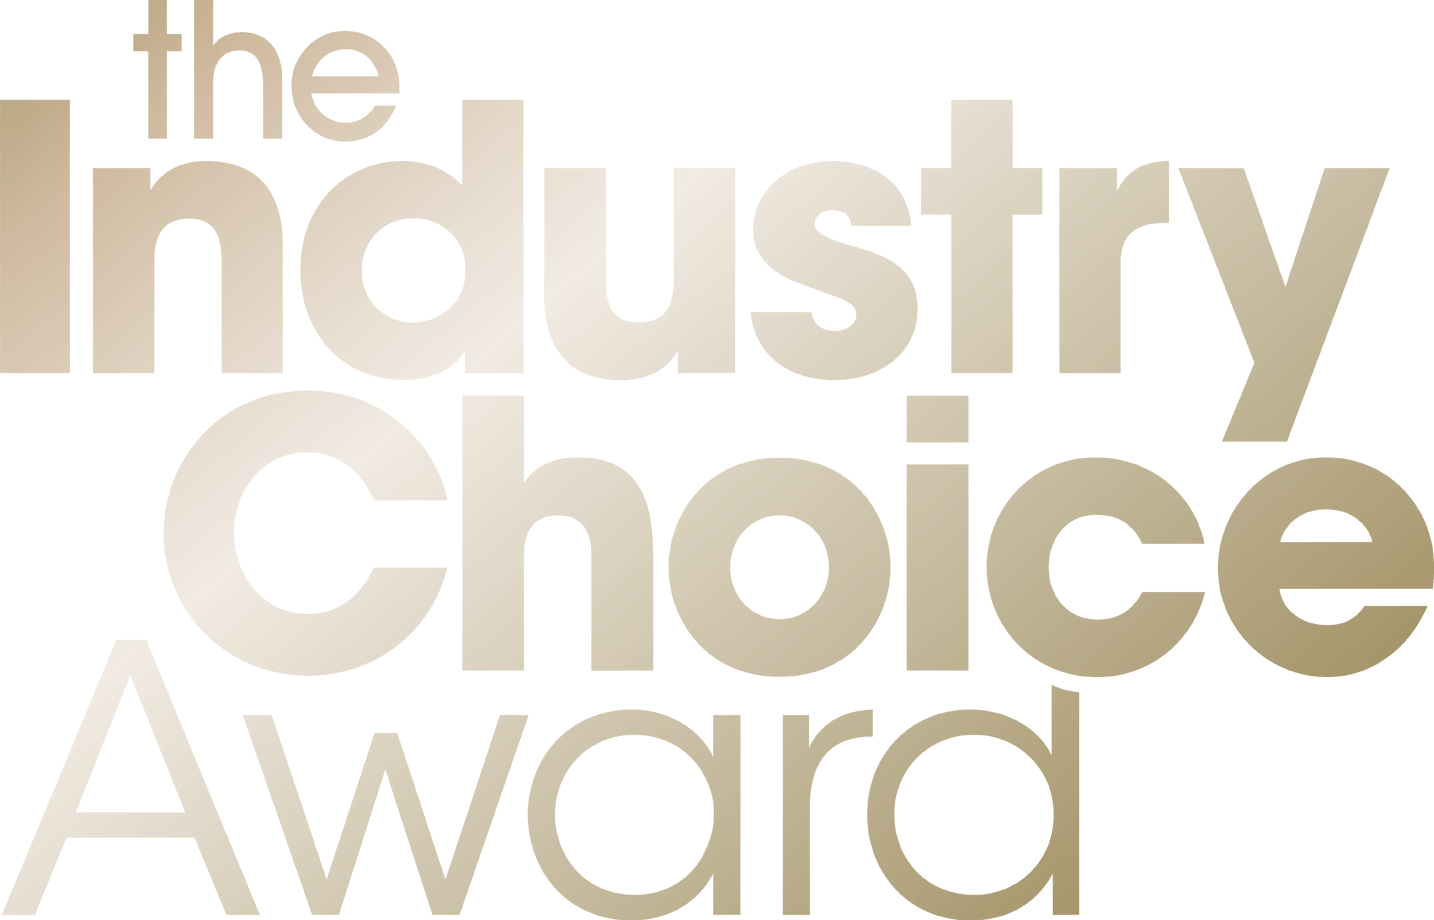 The Industry Choice Award